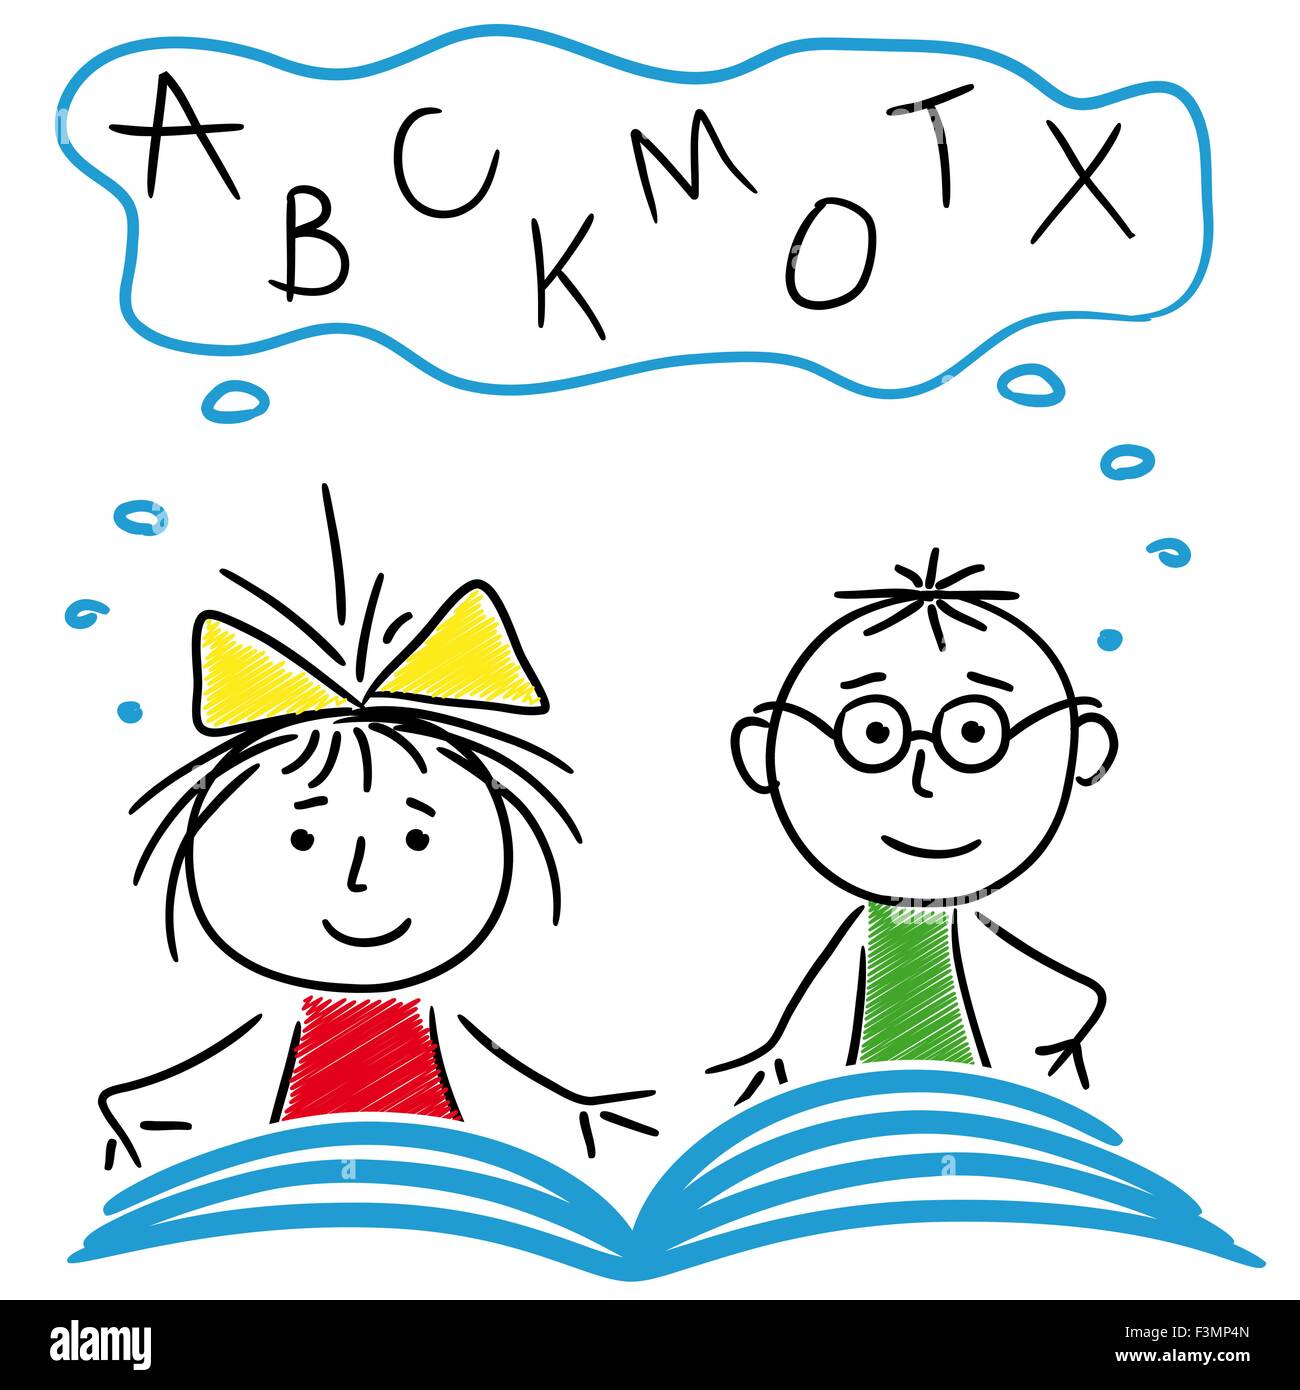 https://c8.alamy.com/comp/F3MP4N/schoolboy-and-schoolgirl-reading-a-book-together-cartoon-sketching-F3MP4N.jpg